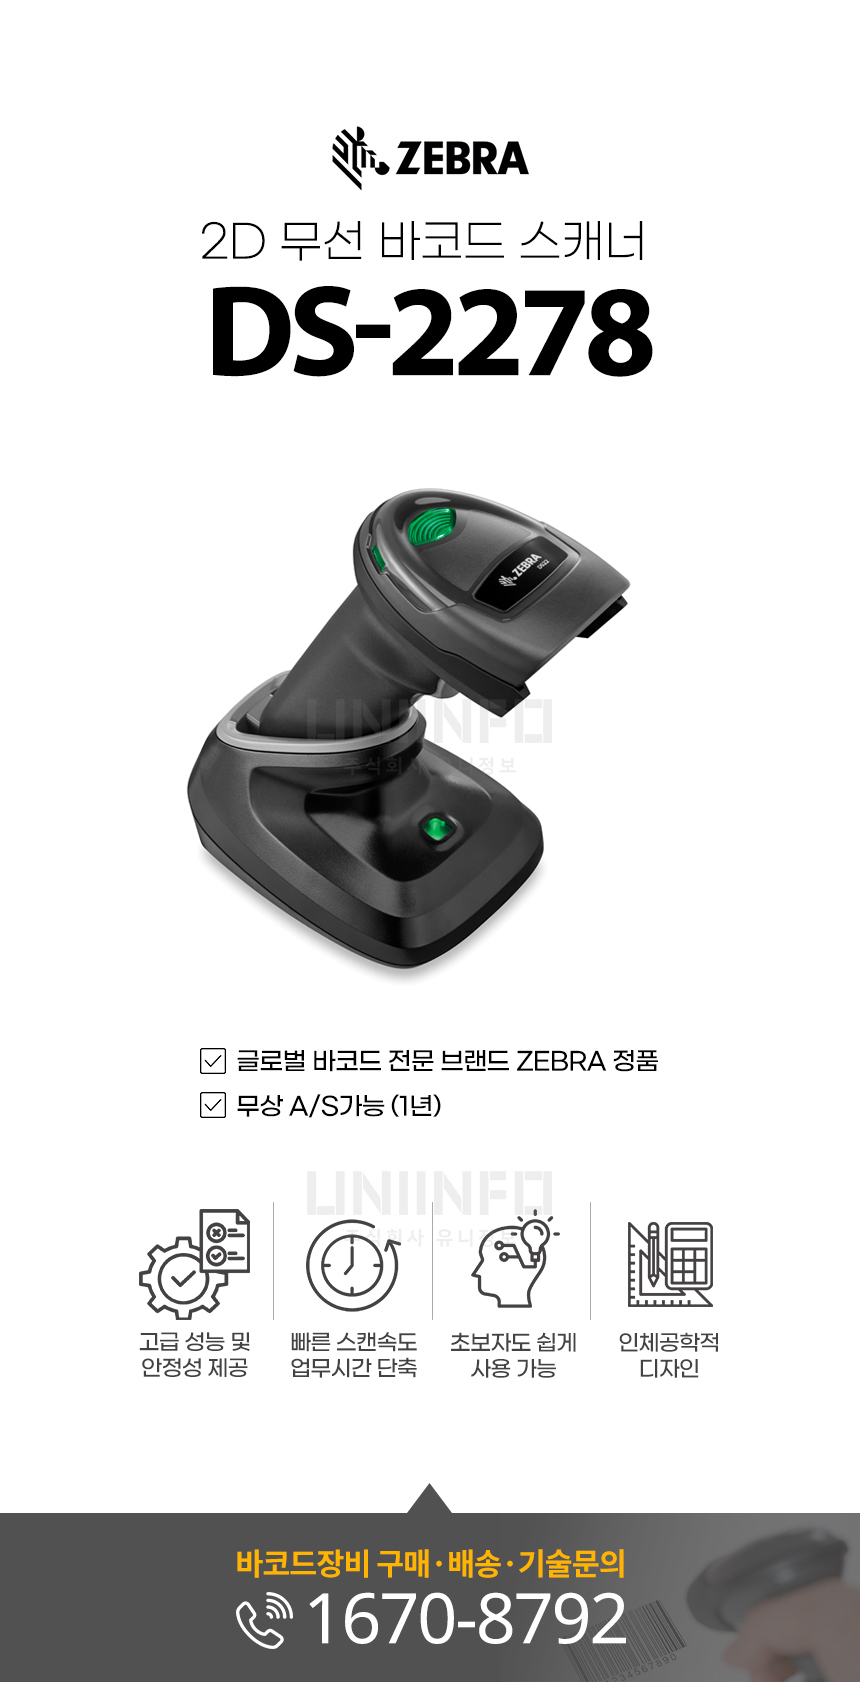 ZEBRA 2D 무선 바코드 스캐너 DS-2278 글로벌 바코드 전문 브랜드 무상 A/S 가능 1년 고성능 안정성 빠른 스캔속도 인체공학적 디자인